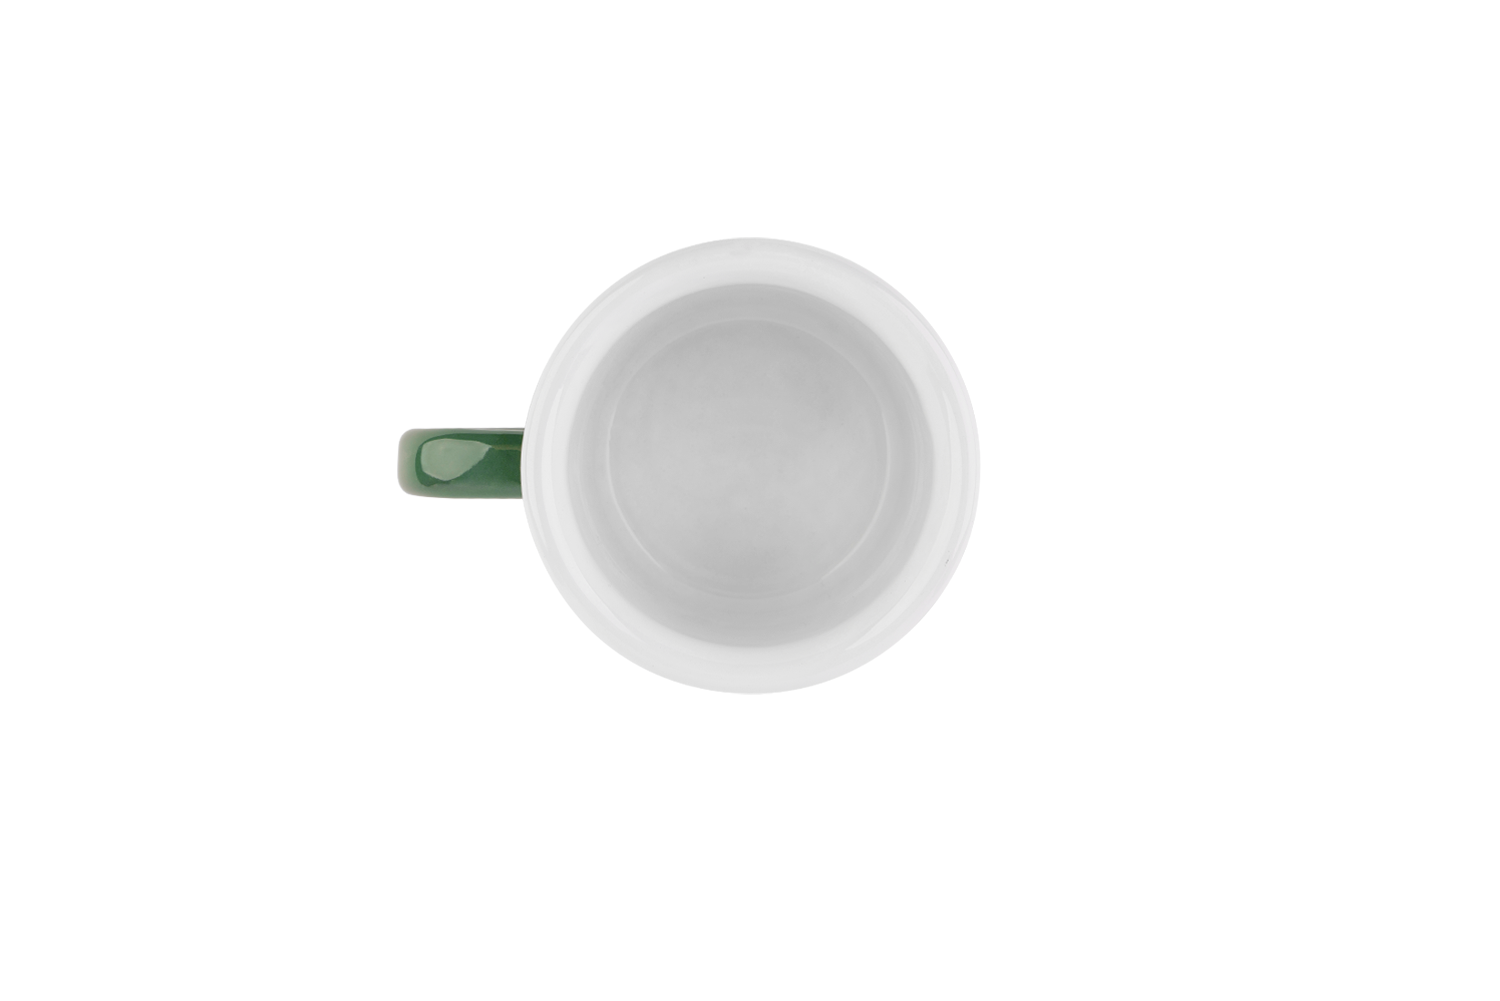 Blick ins weiße Innere der olivgrünen Emaille-Tasse